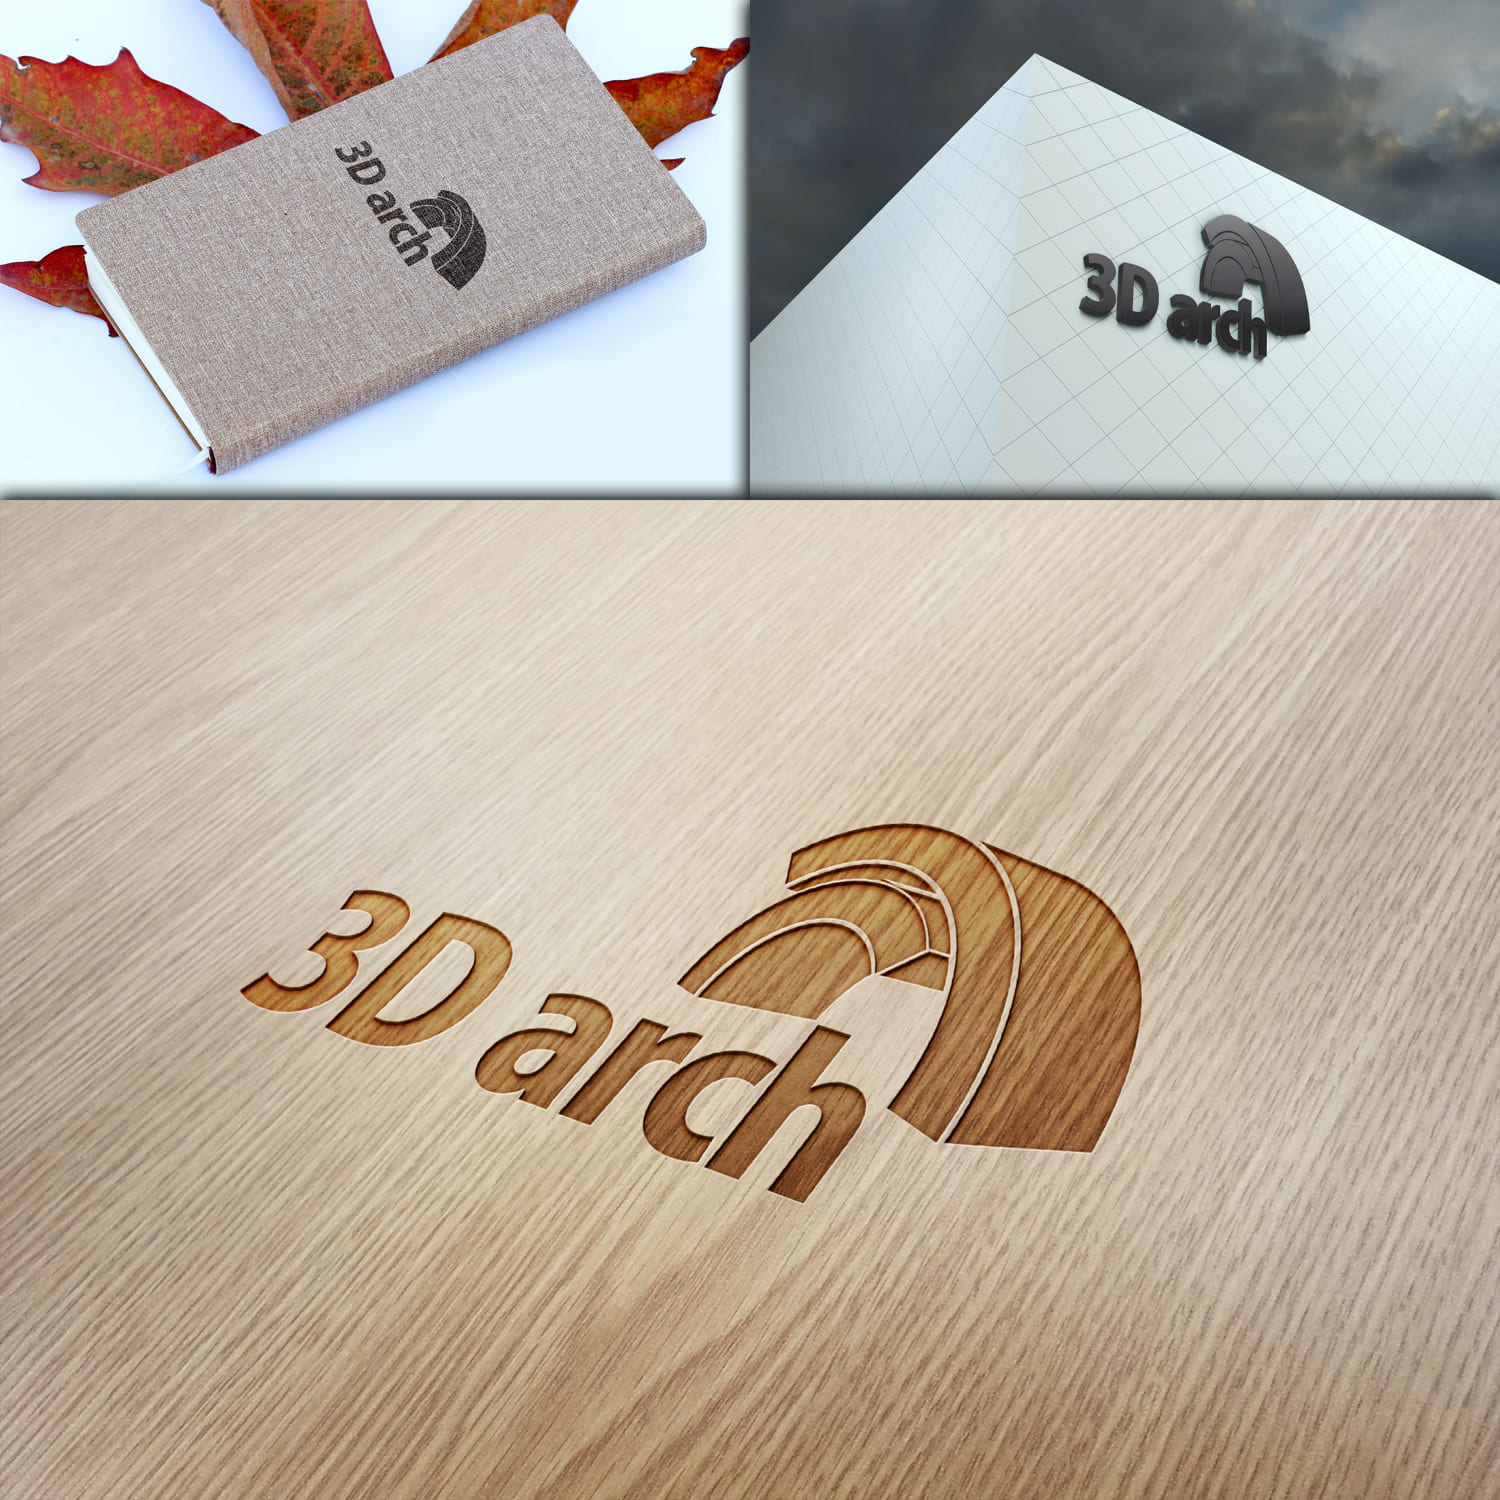 3D Arch Logo Design Template Created By shahsoft.